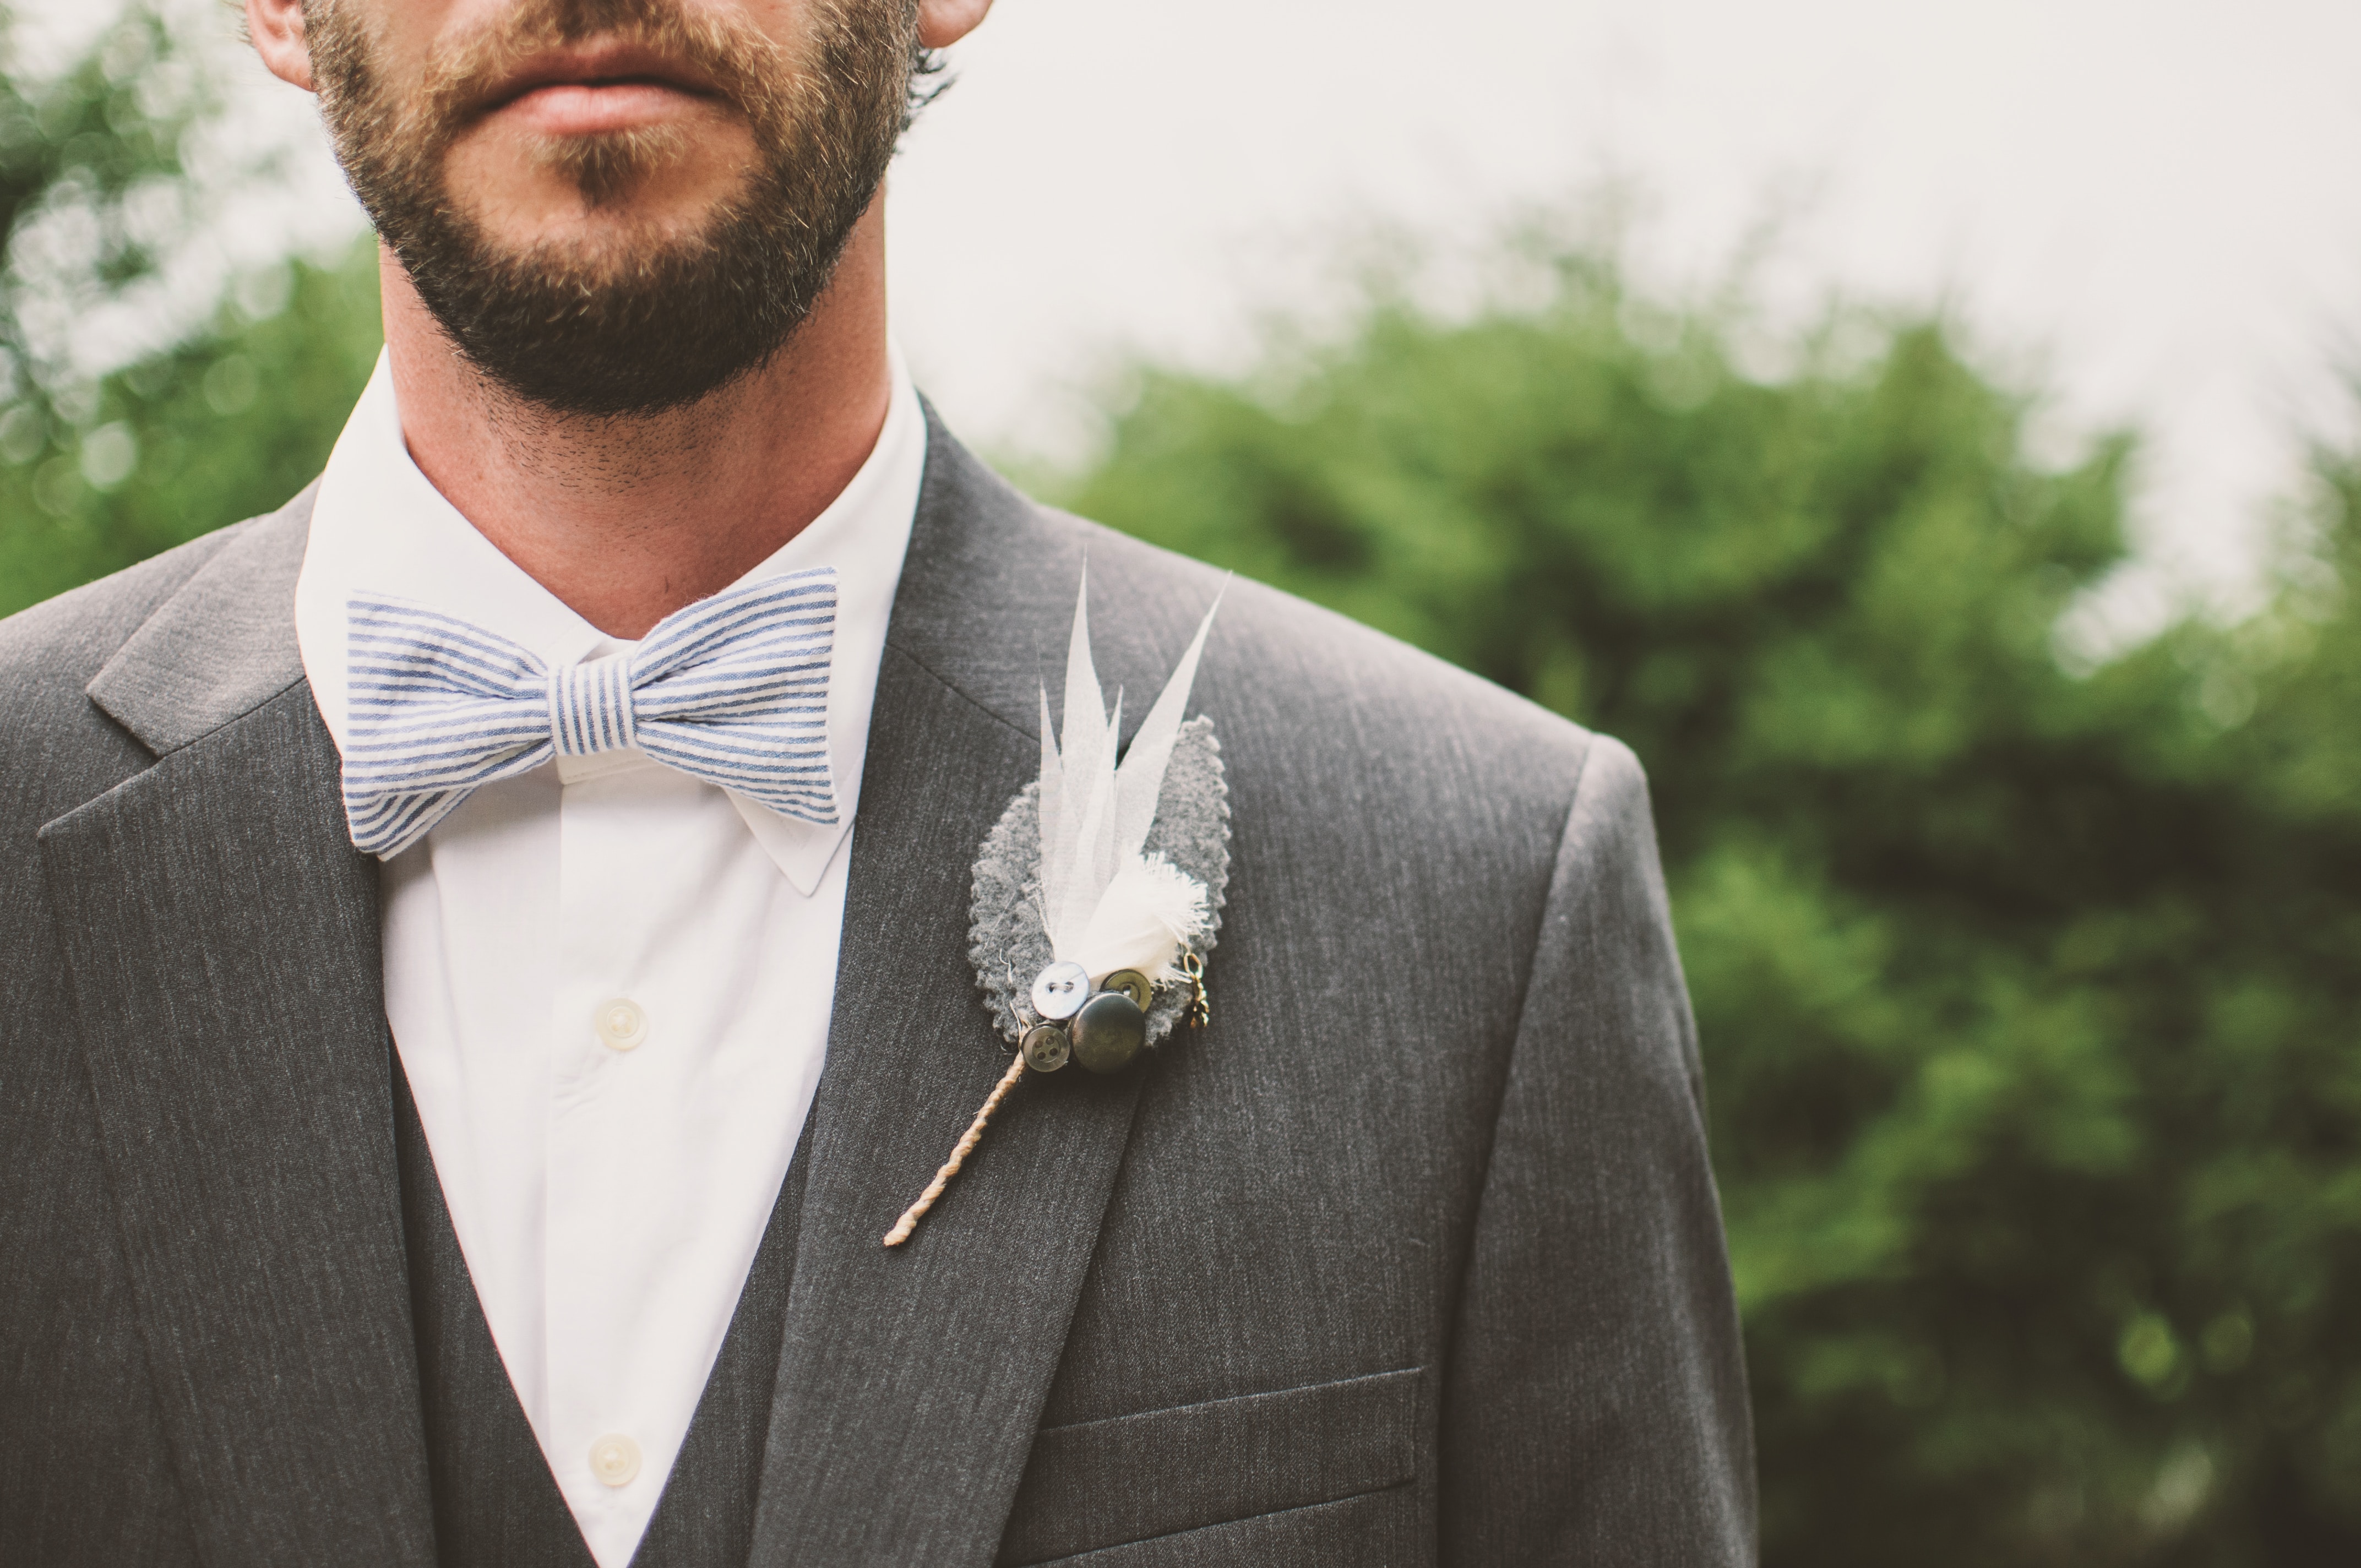 A groom. | Source: Unsplash